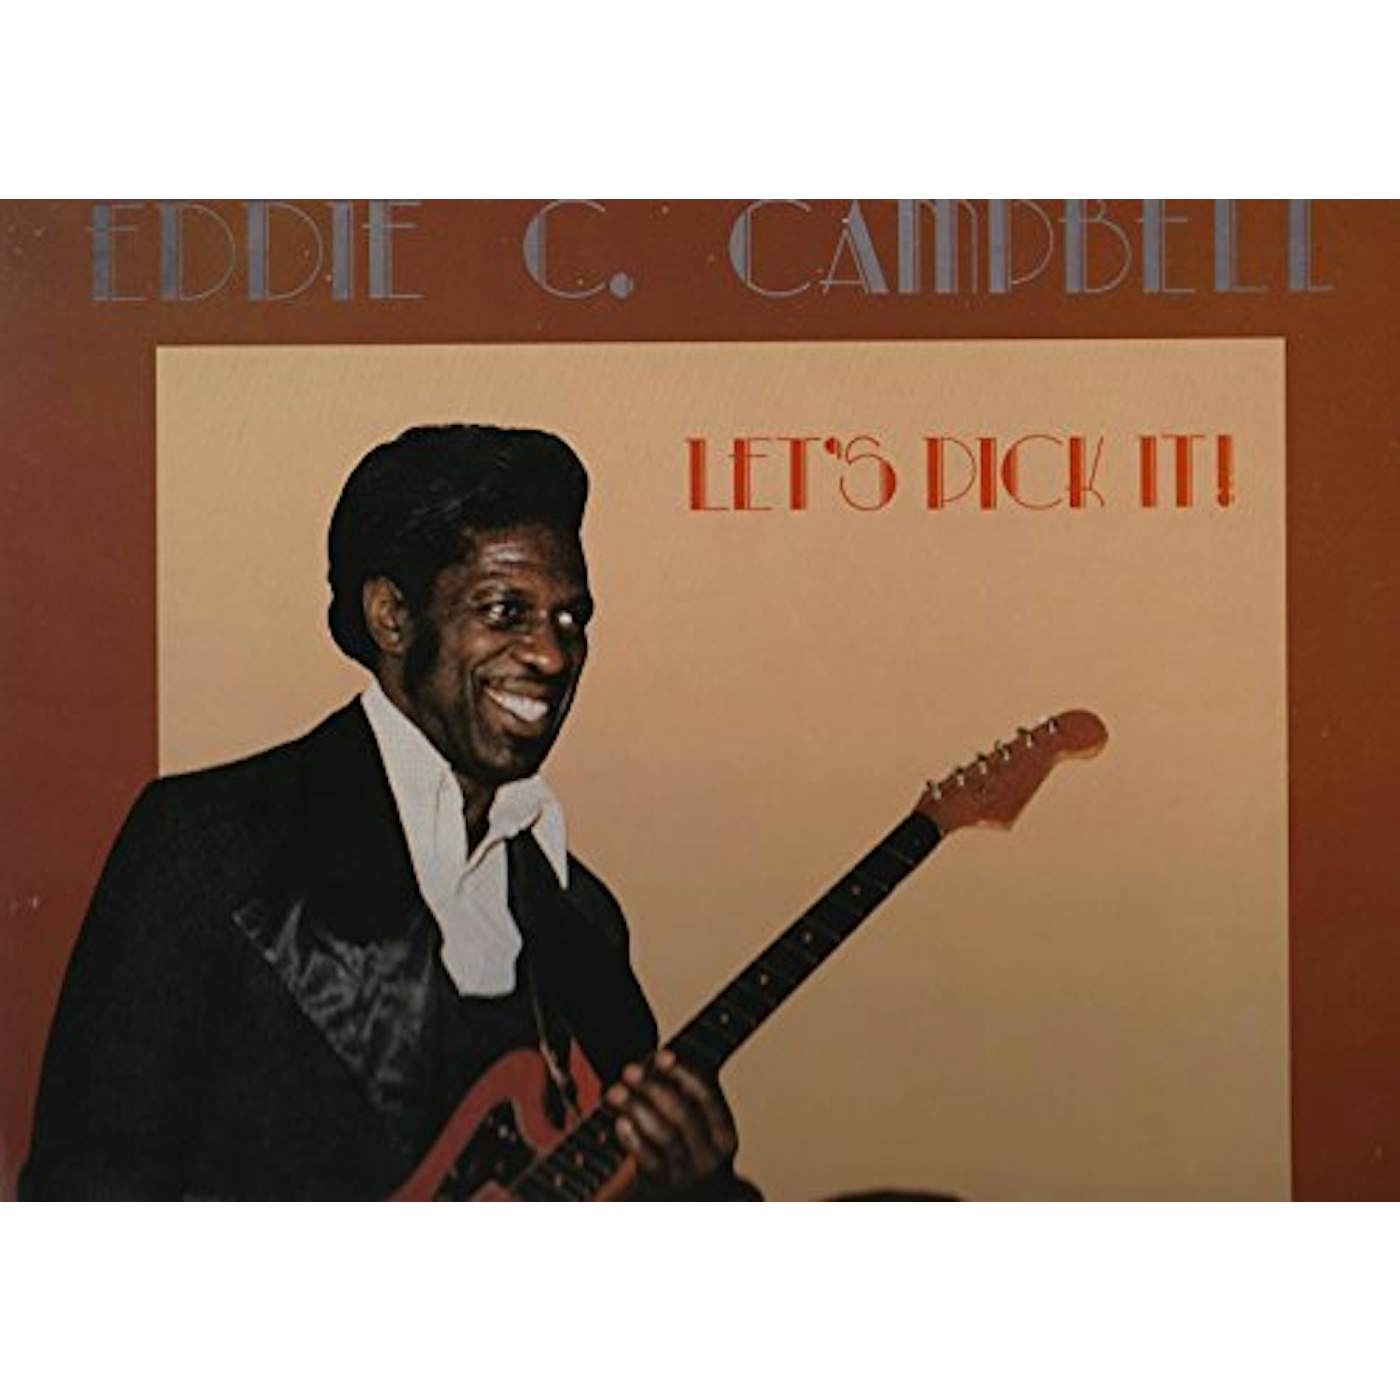 Eddie C. Campbell LET'S PICK IT! Vinyl Record